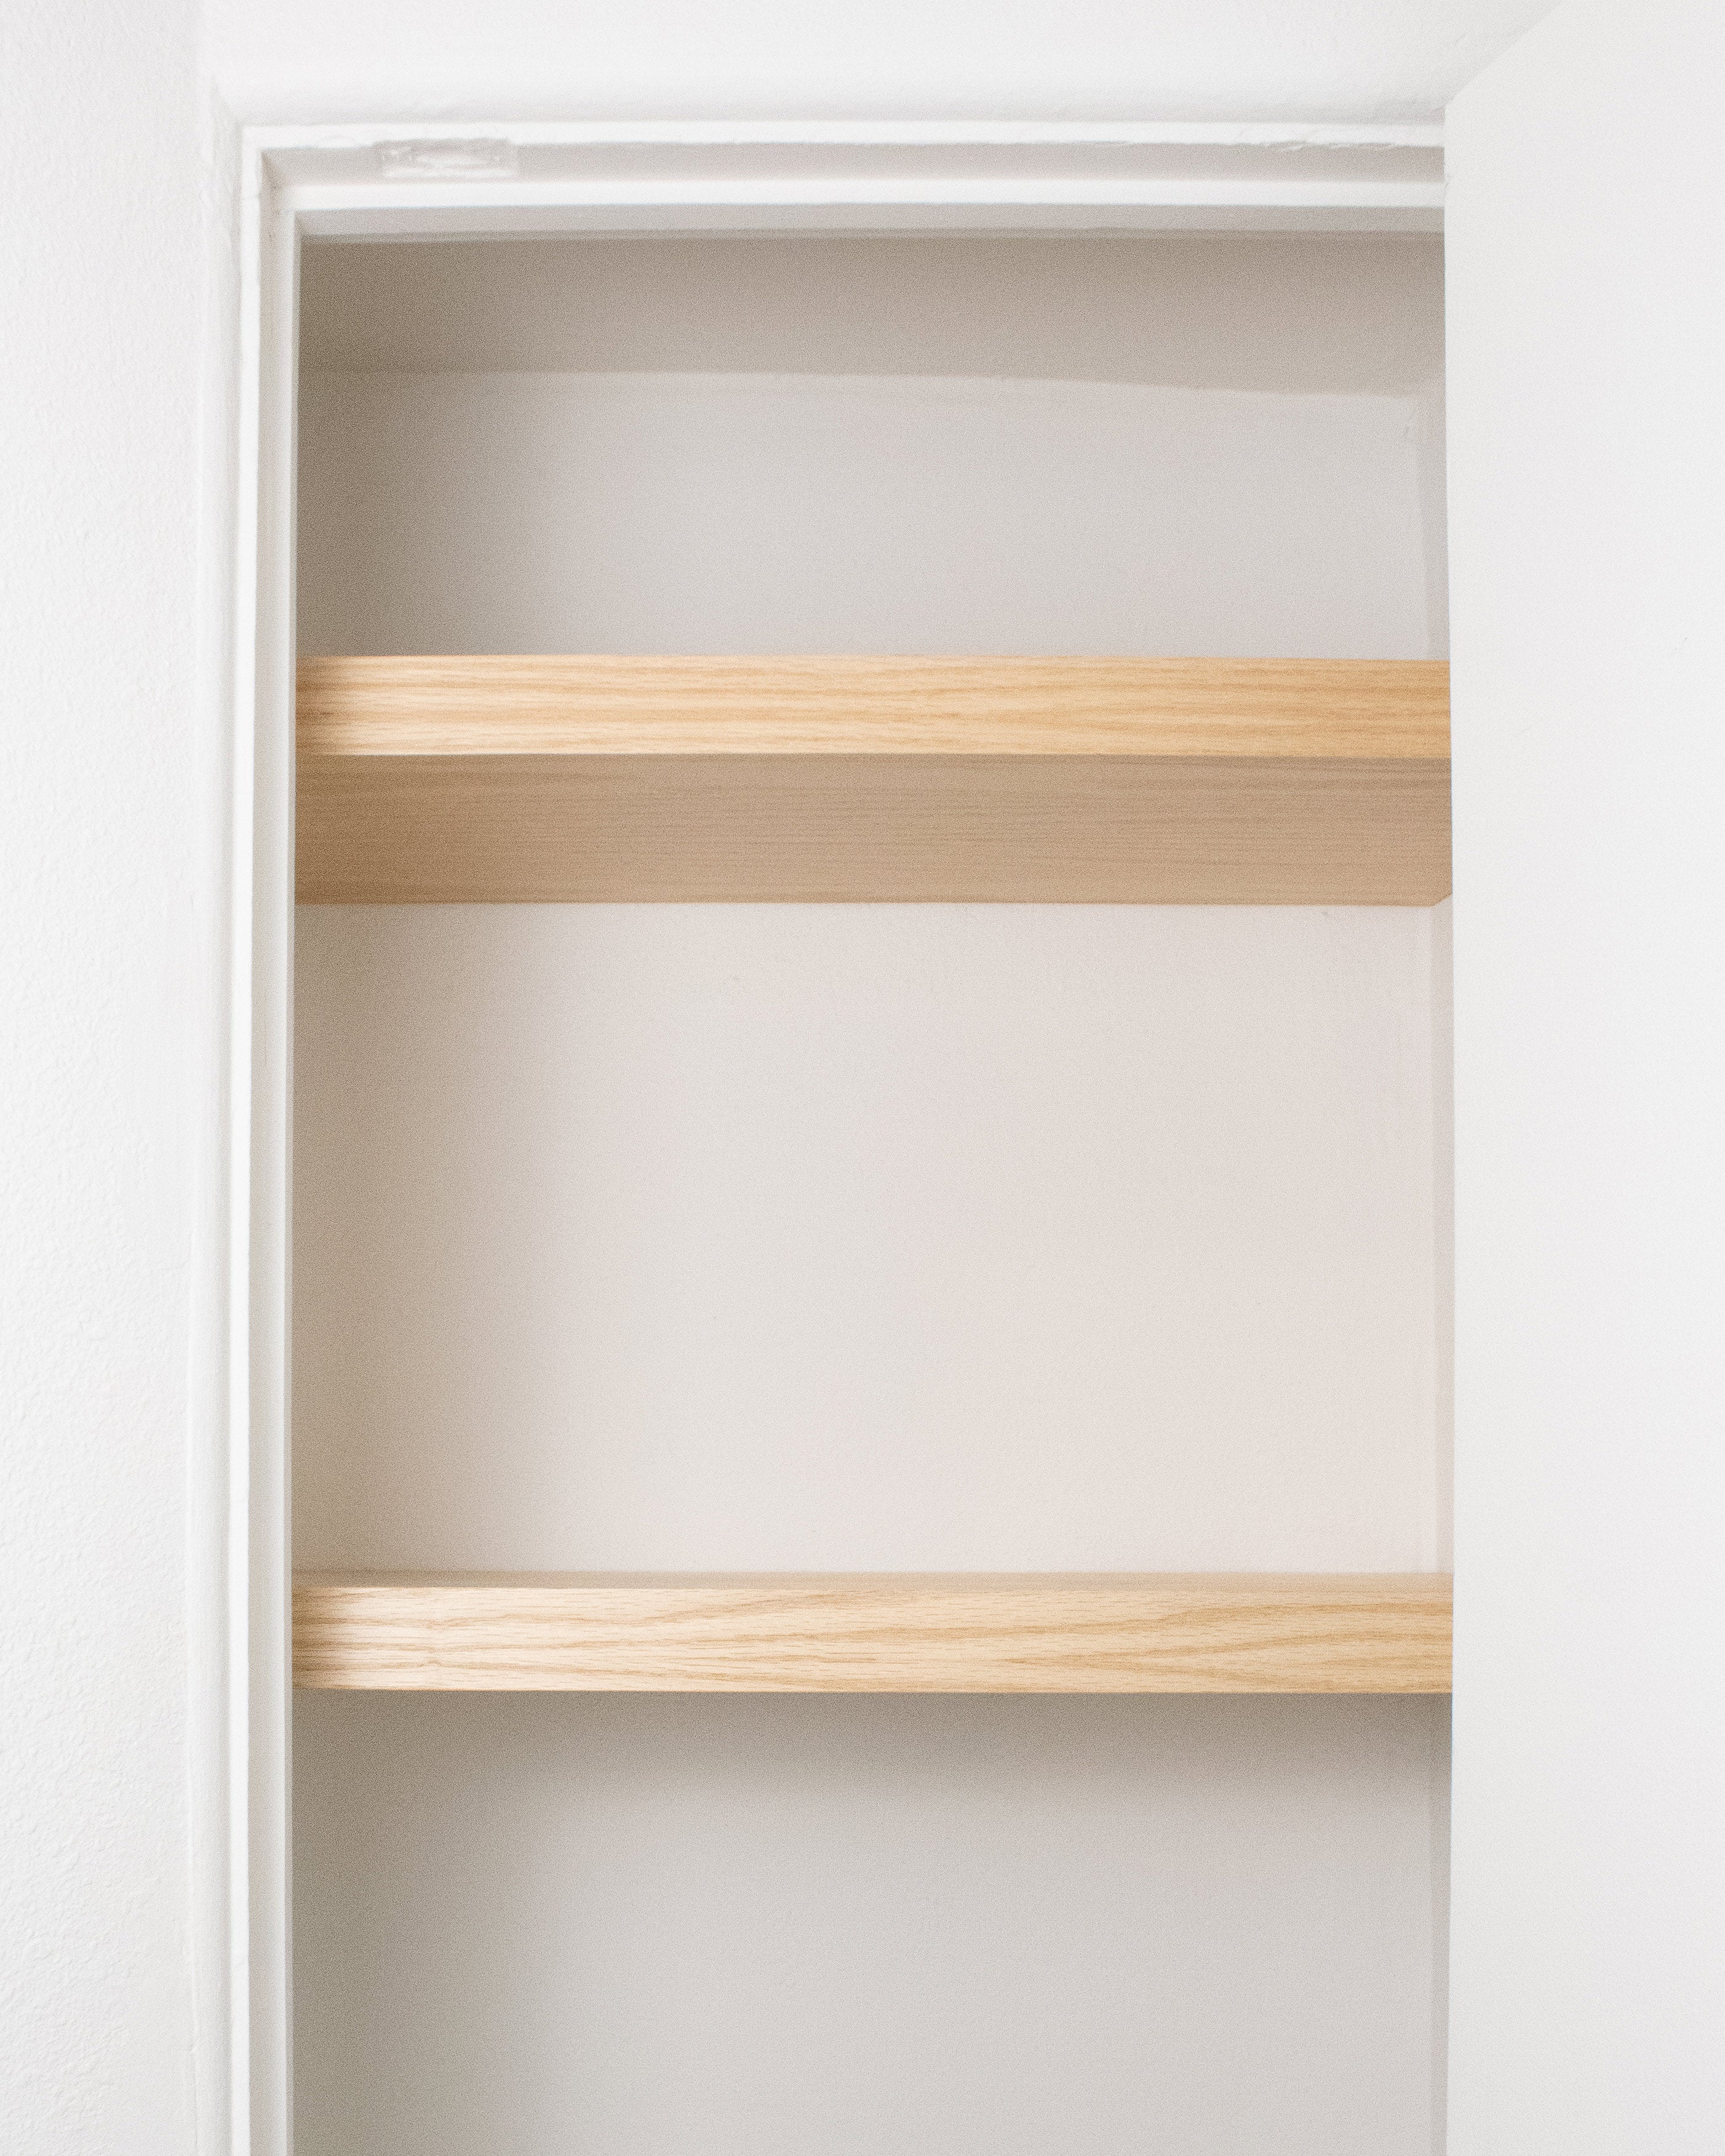 Black 1.75" thick Cabinet Top / Slab Shelf